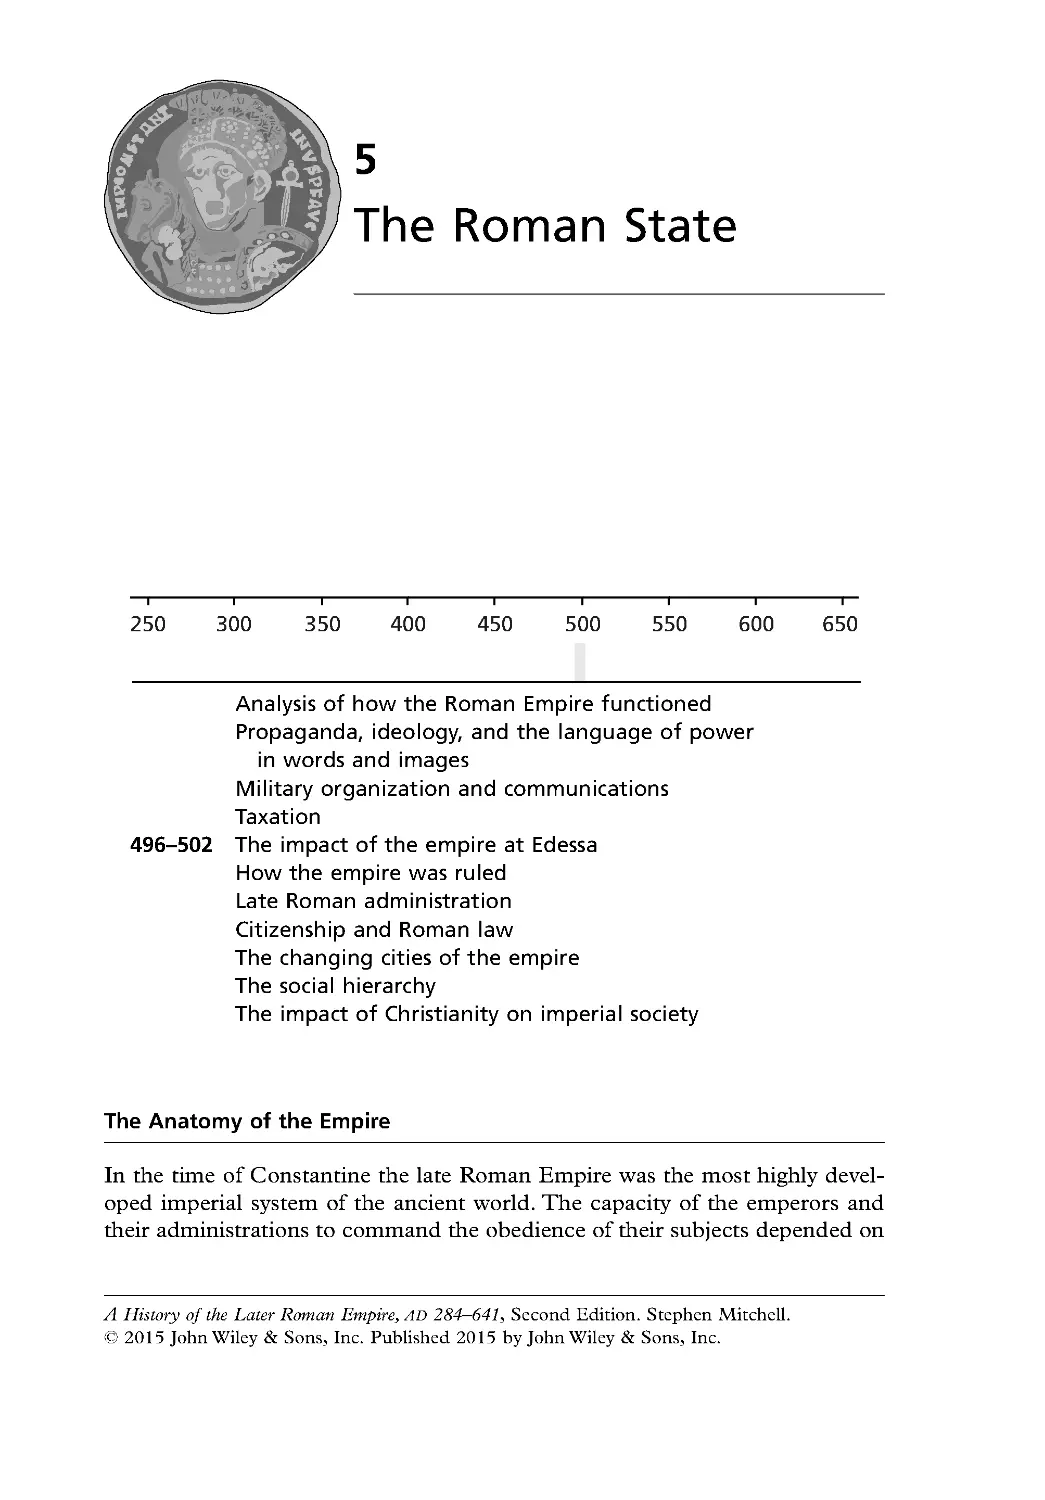 5: The Roman State